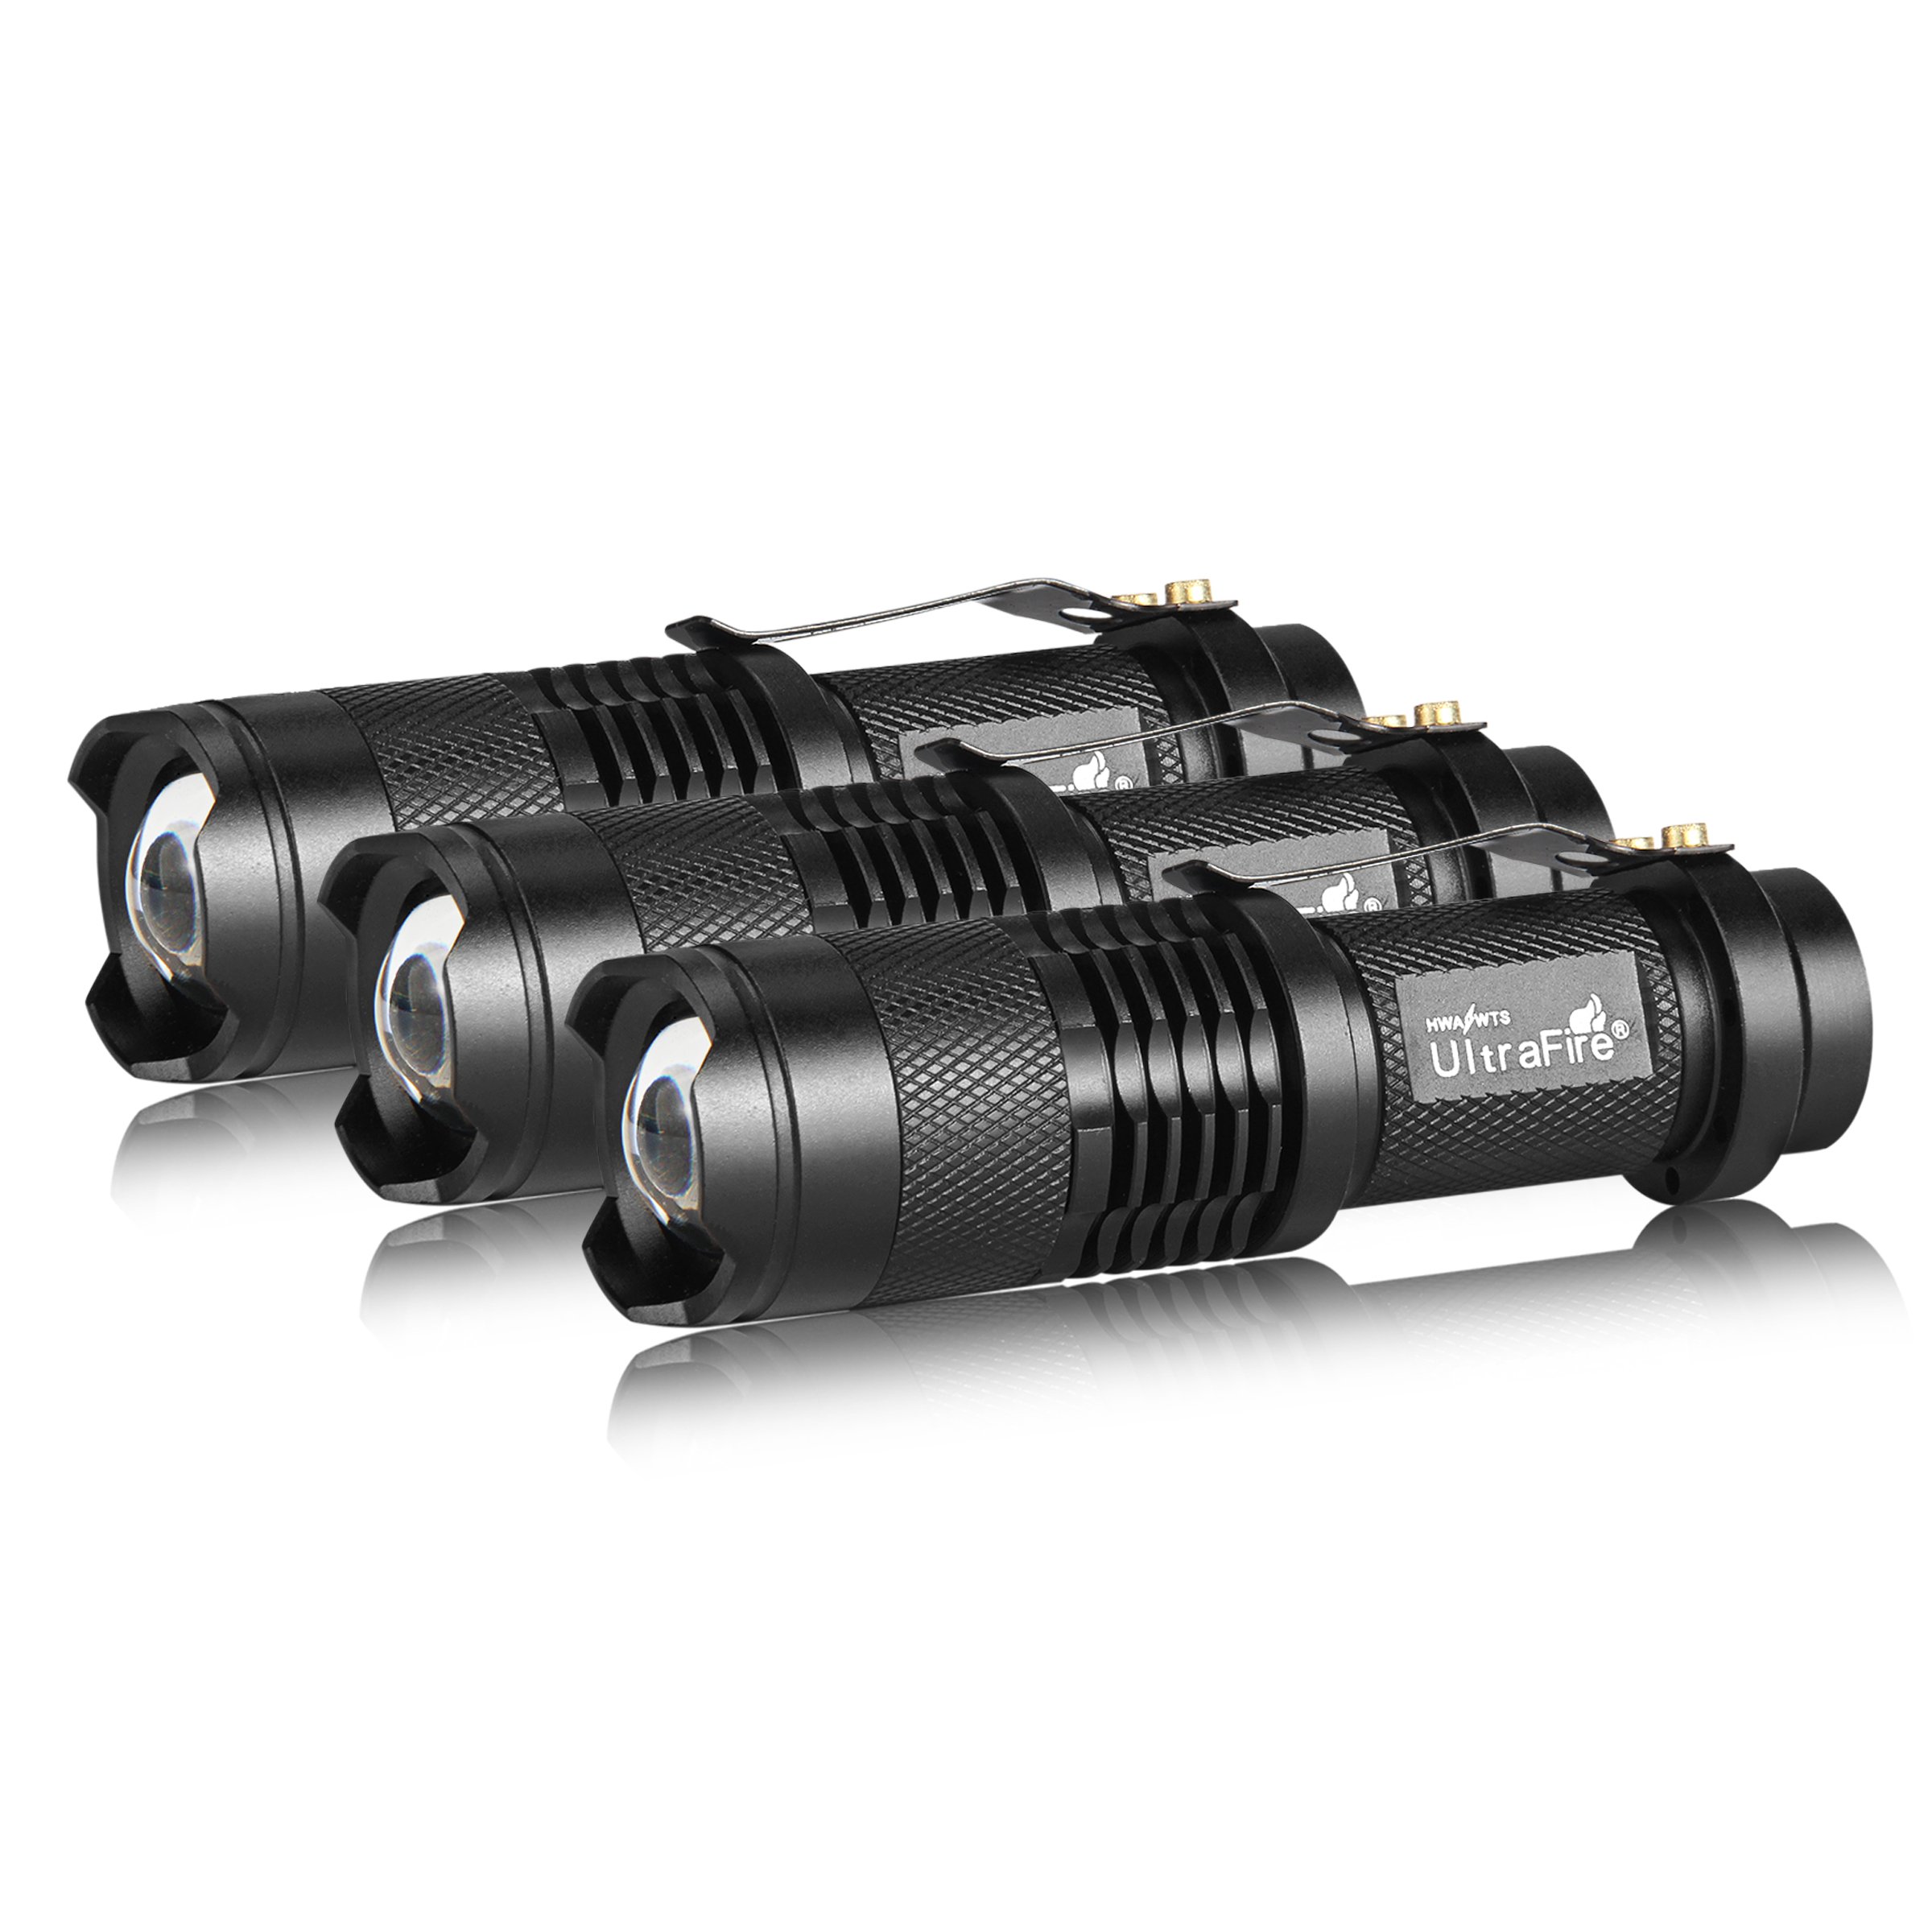 ULTRAFIRE 3 Pack Mini Flashlights Focus Adjustable SK68 Single Mode Tactical LED Flashlight, Ultra Bright 300 Lumens Torch